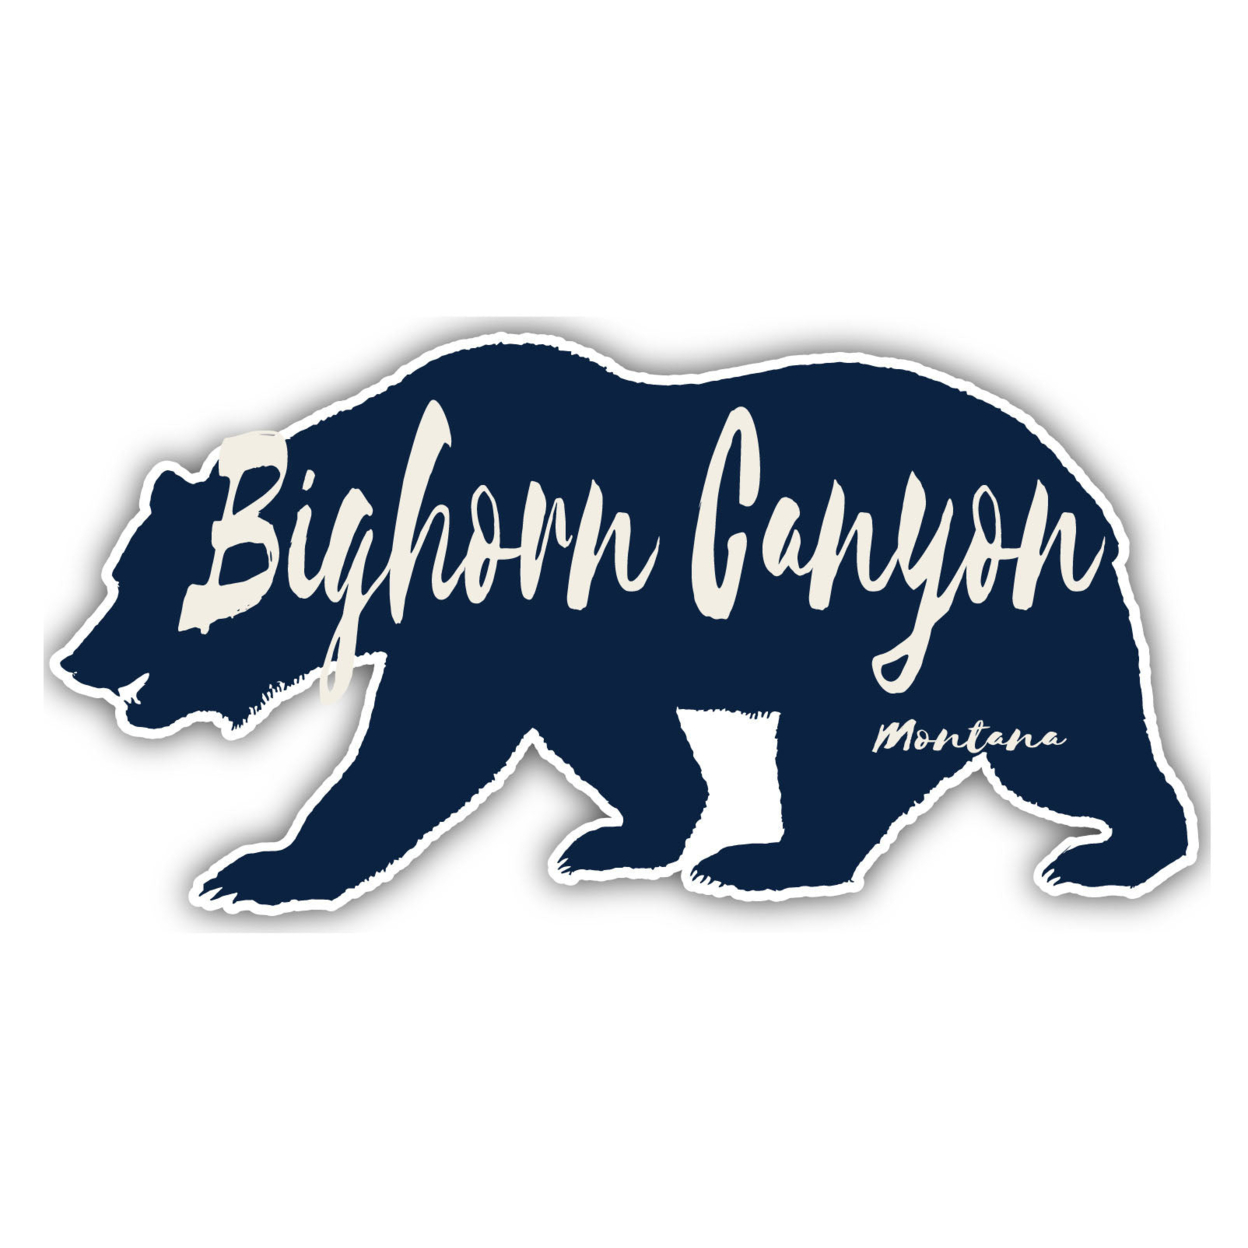 Bighorn Canyon Montana Souvenir Decorative Stickers (Choose Theme And Size) - Single Unit, 6-Inch, Bear